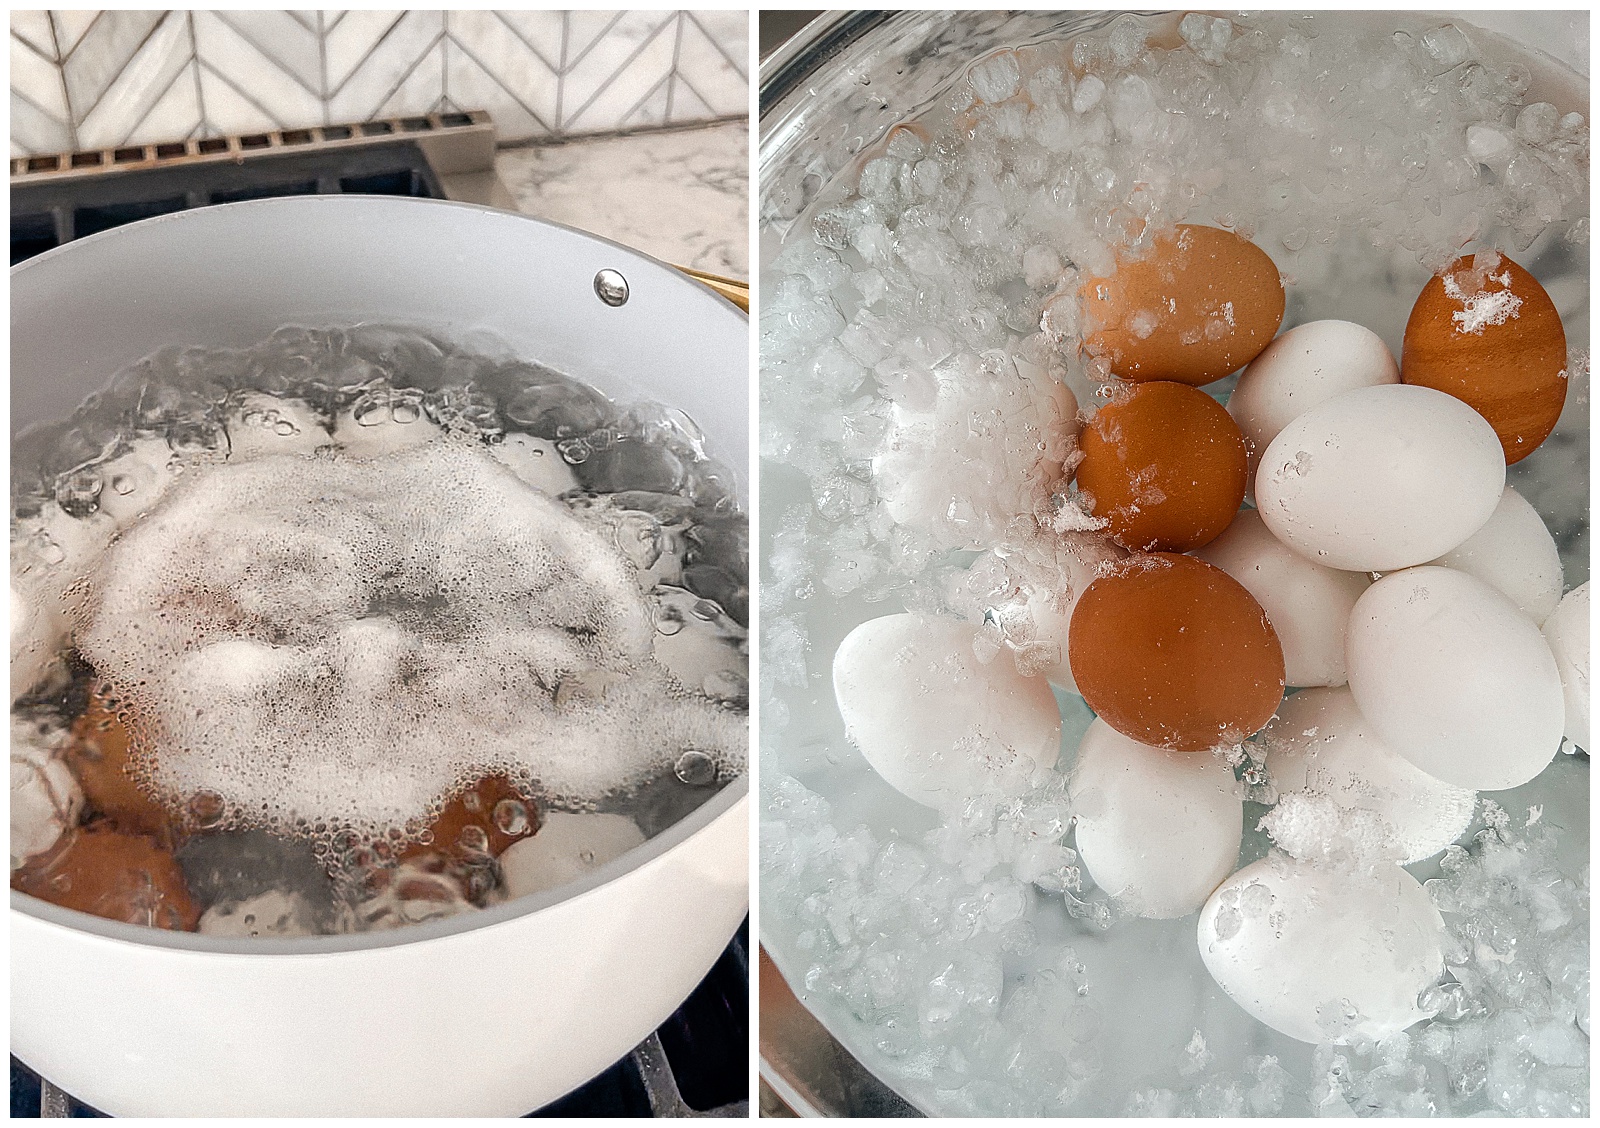 Hand boiling eggs